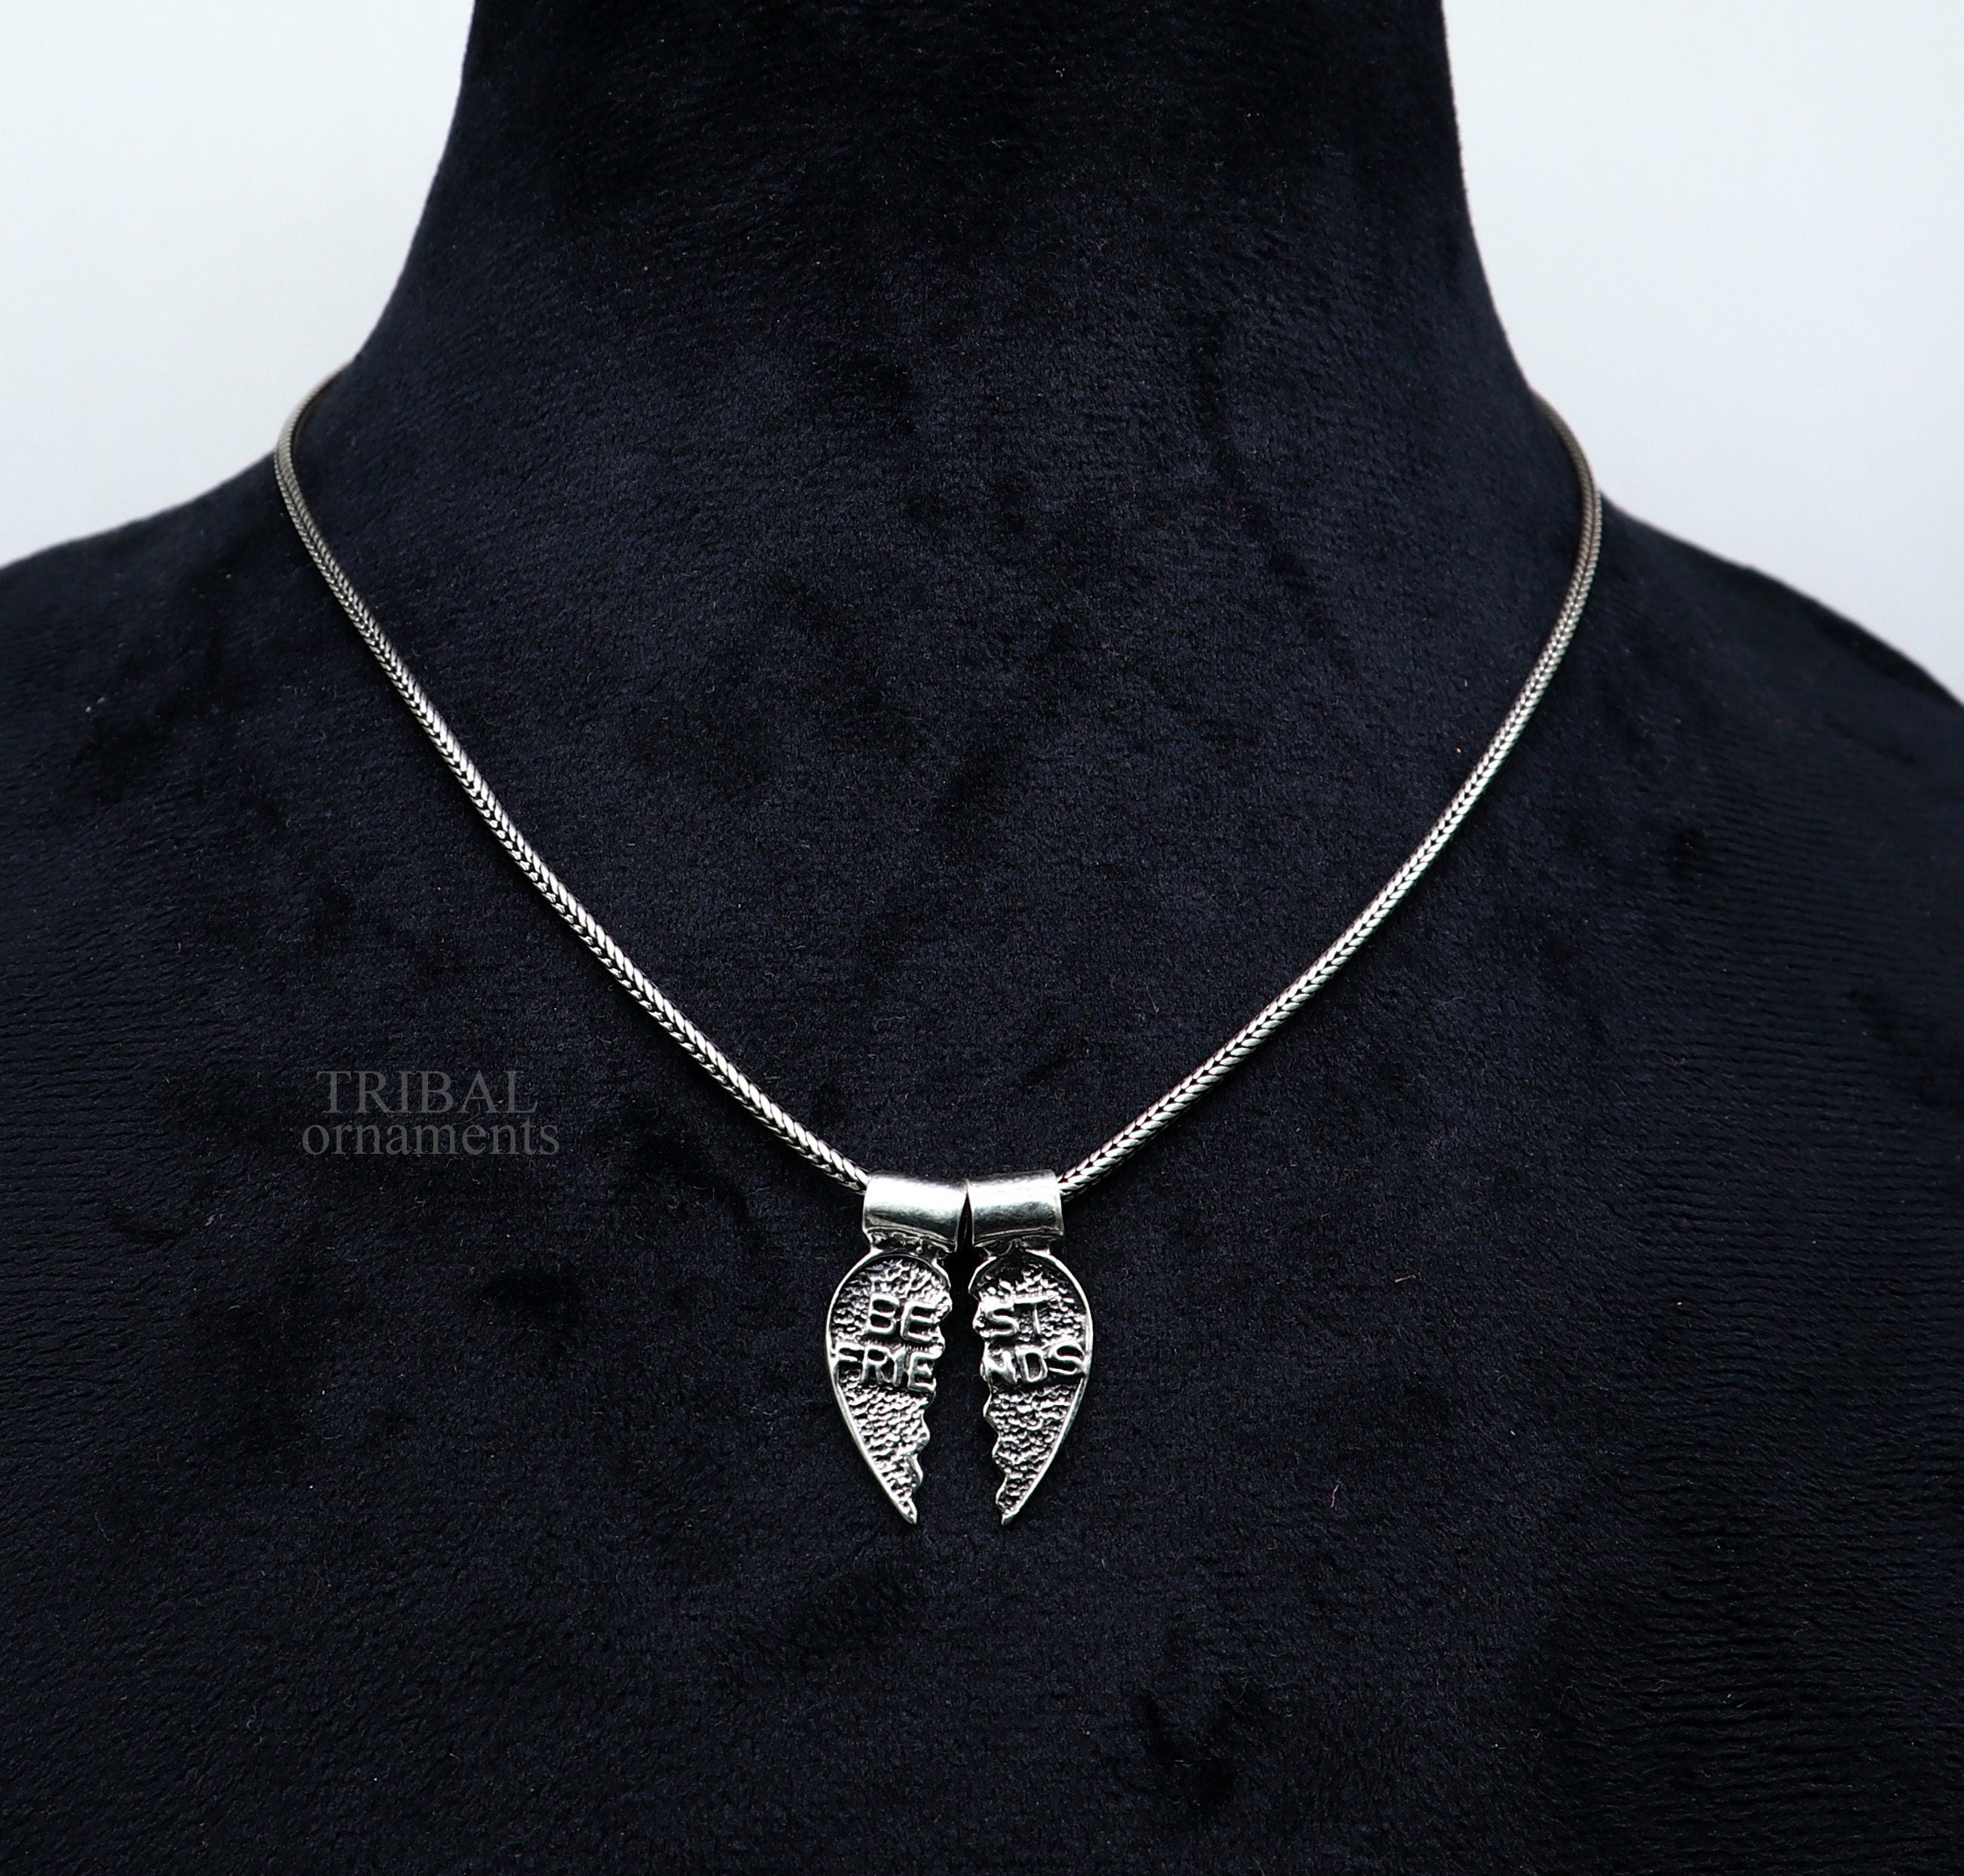 Broken Heart Necklace in Sterling Silver, Personalized Heart Shape Necklace  - Etsy